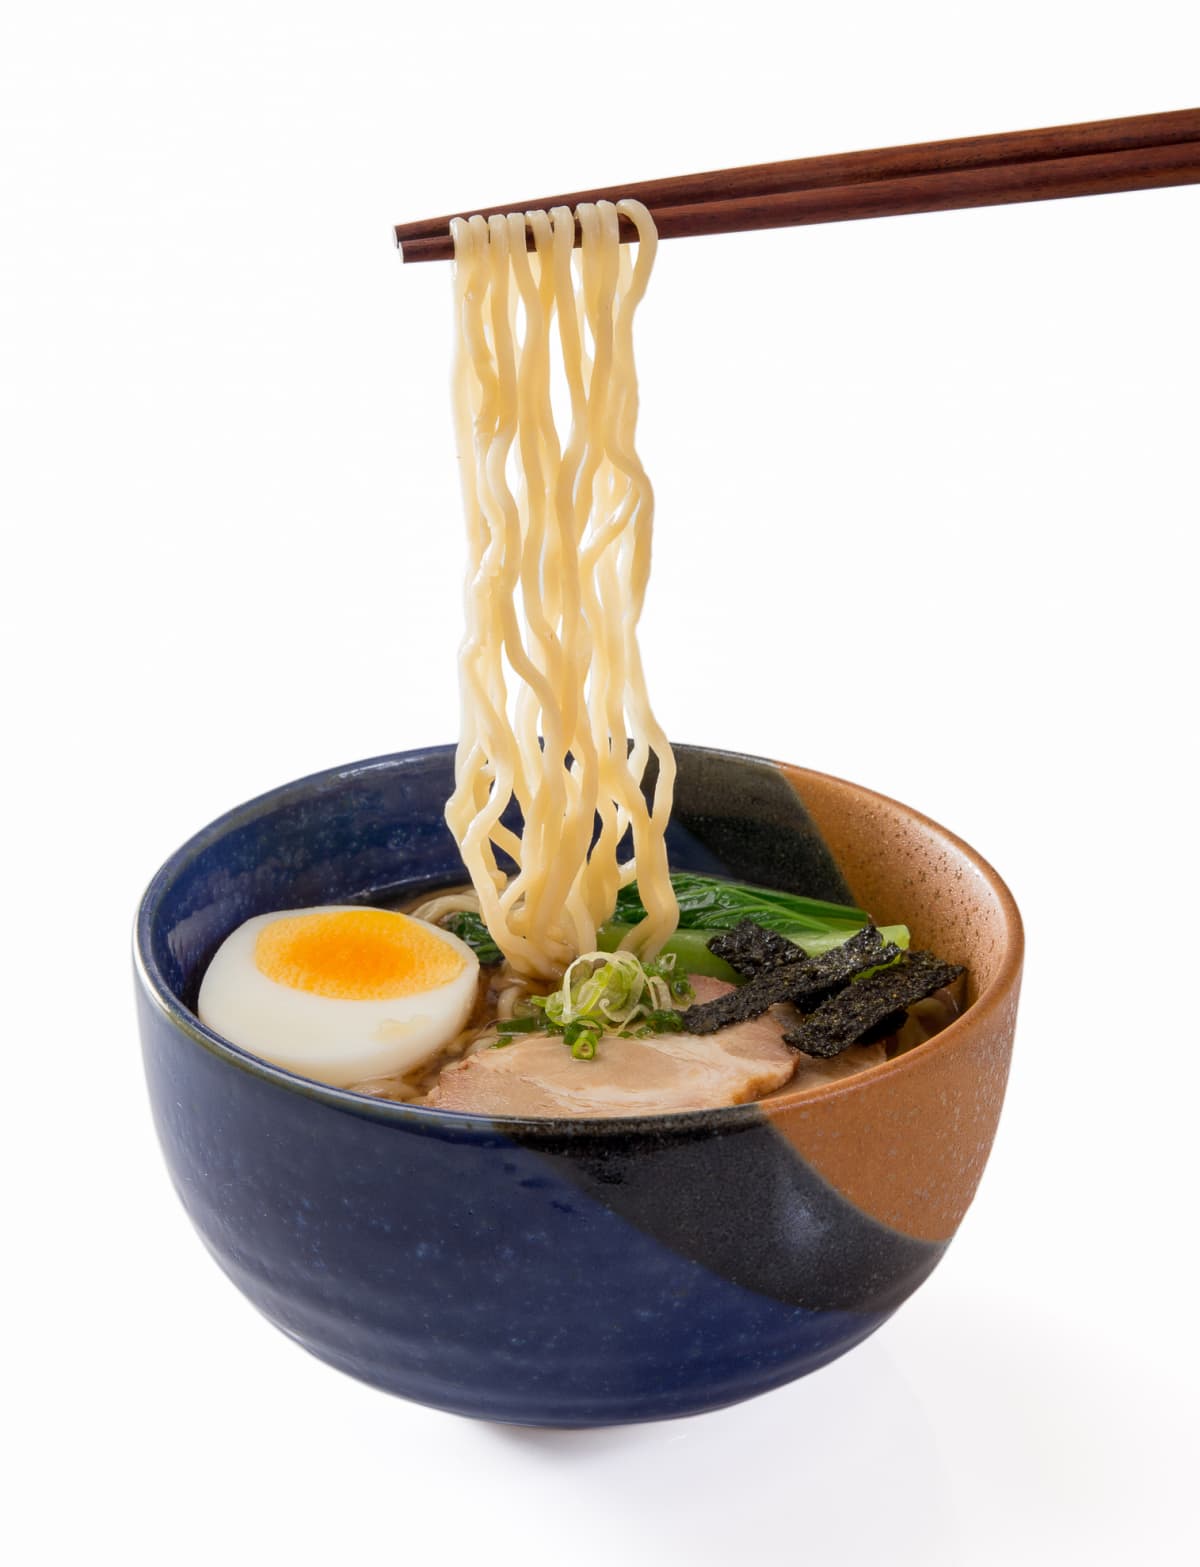 Japanese ramen noodles held over a bowl with chopsticks